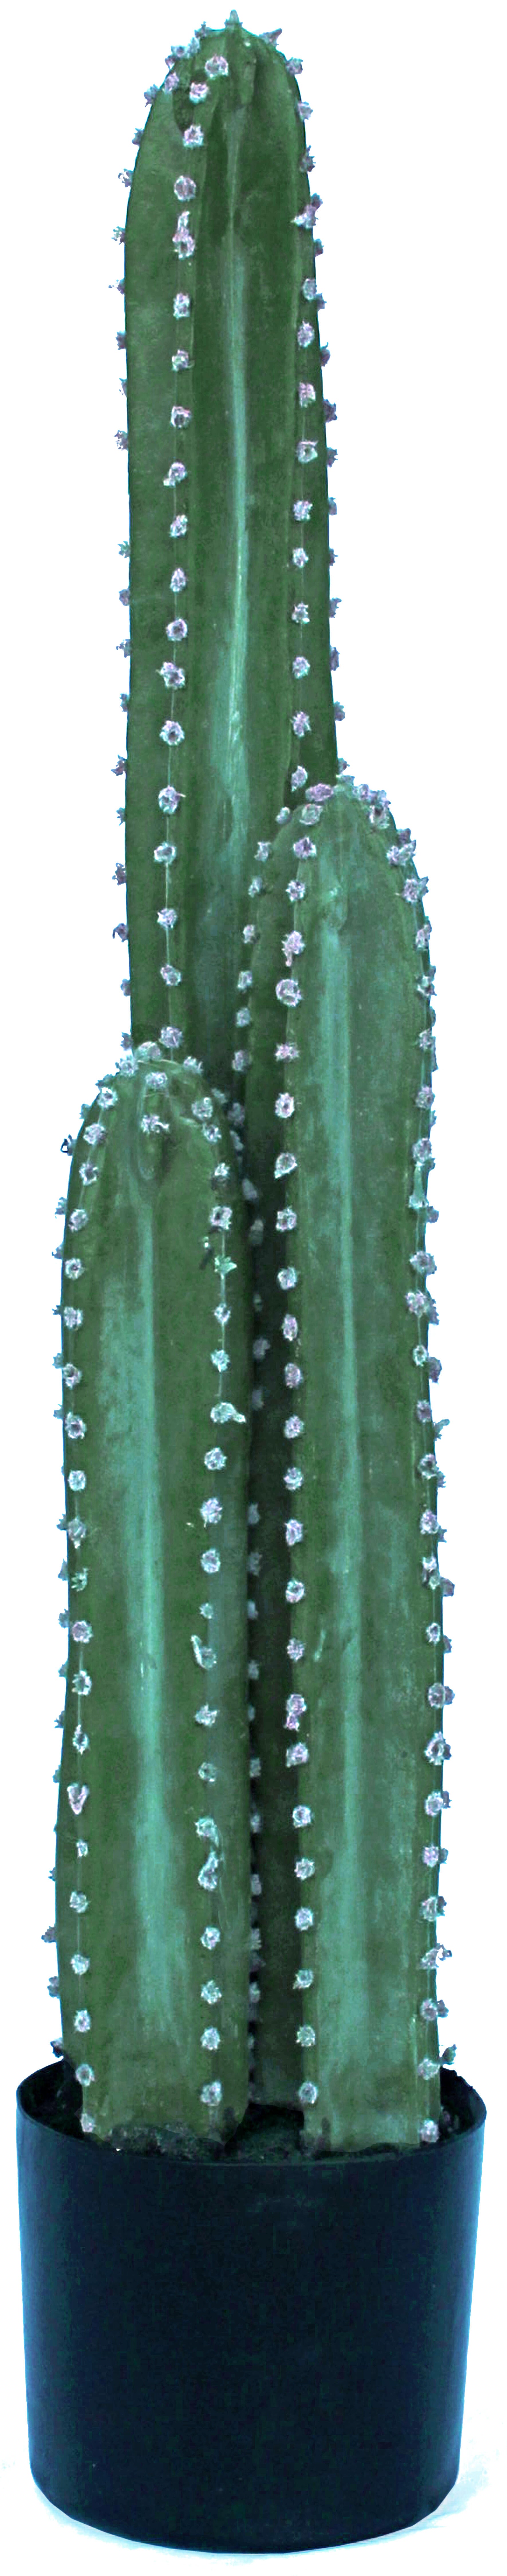 Planta artificial cactus de 85 cm de altura en maceta de 16.5 cm